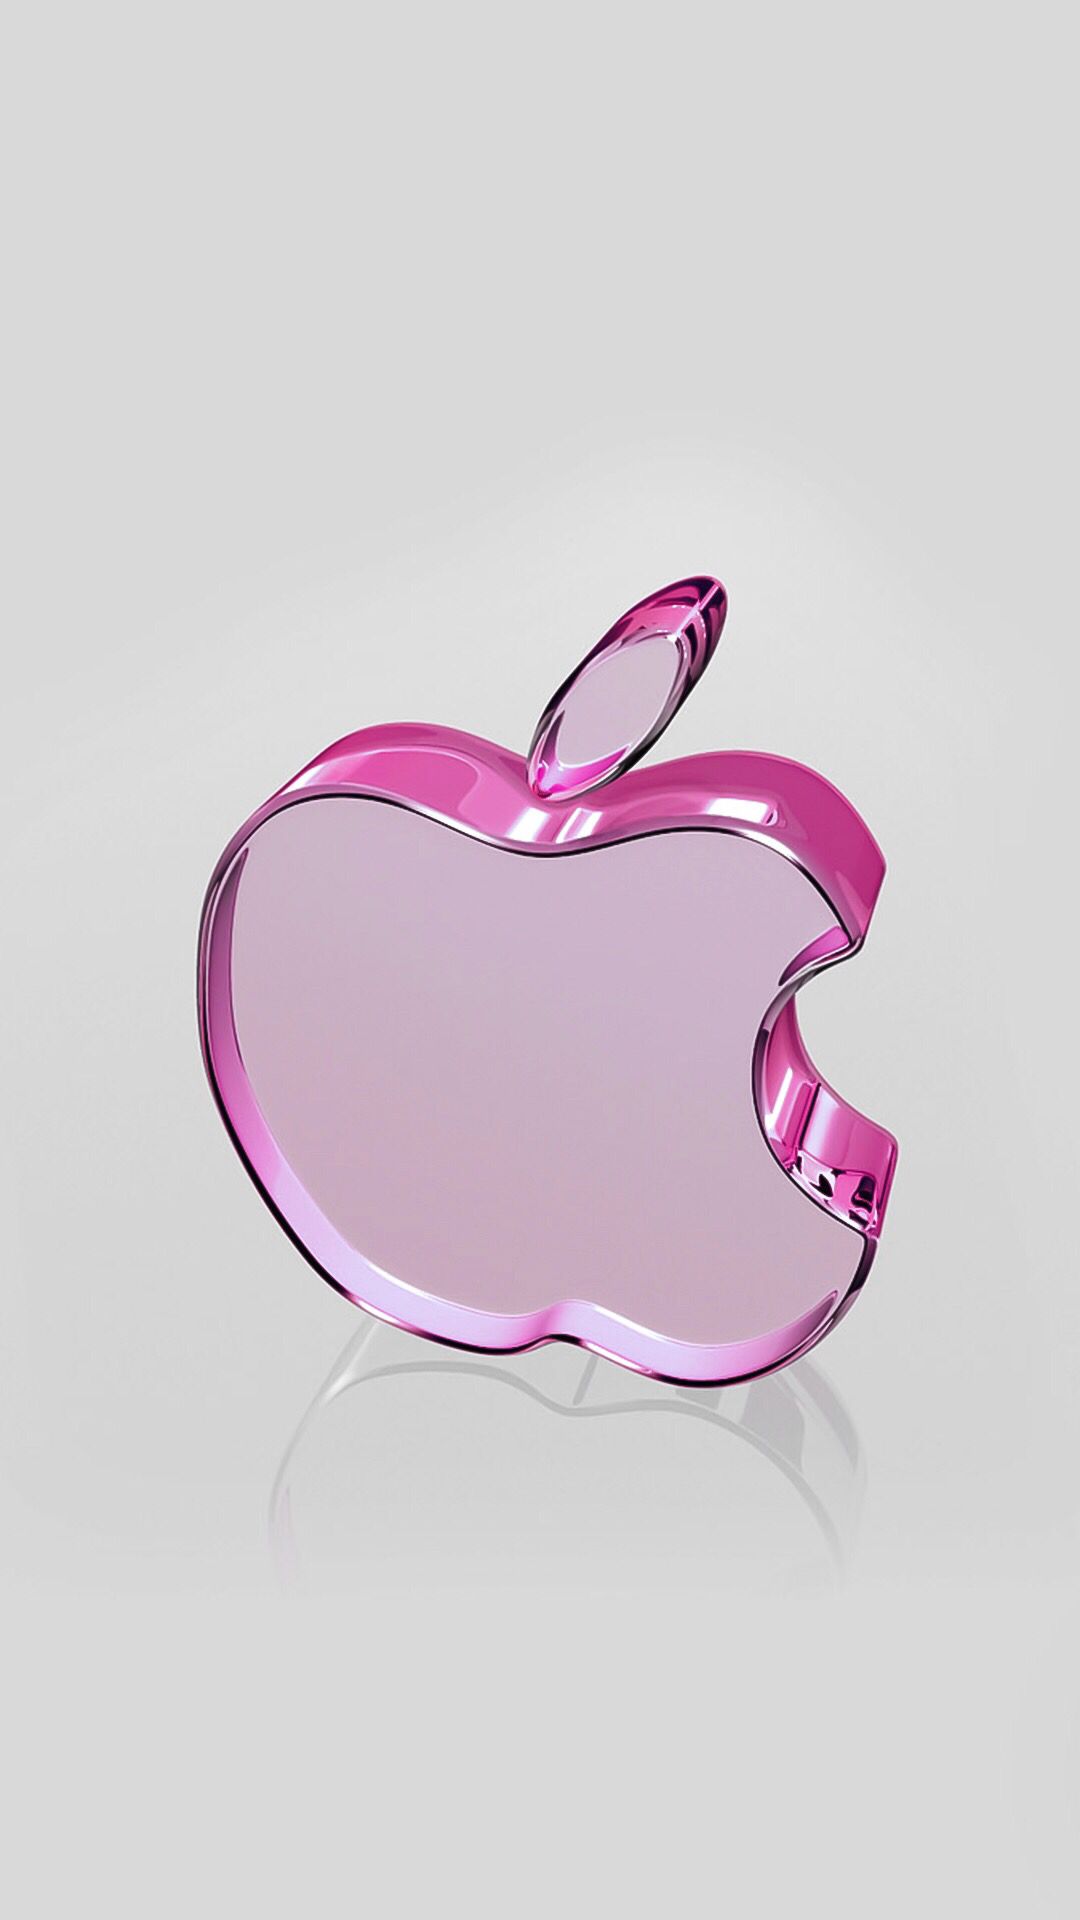 Pink Apple. Apple wallpaper, Apple logo wallpaper, Apple wallpaper iphone